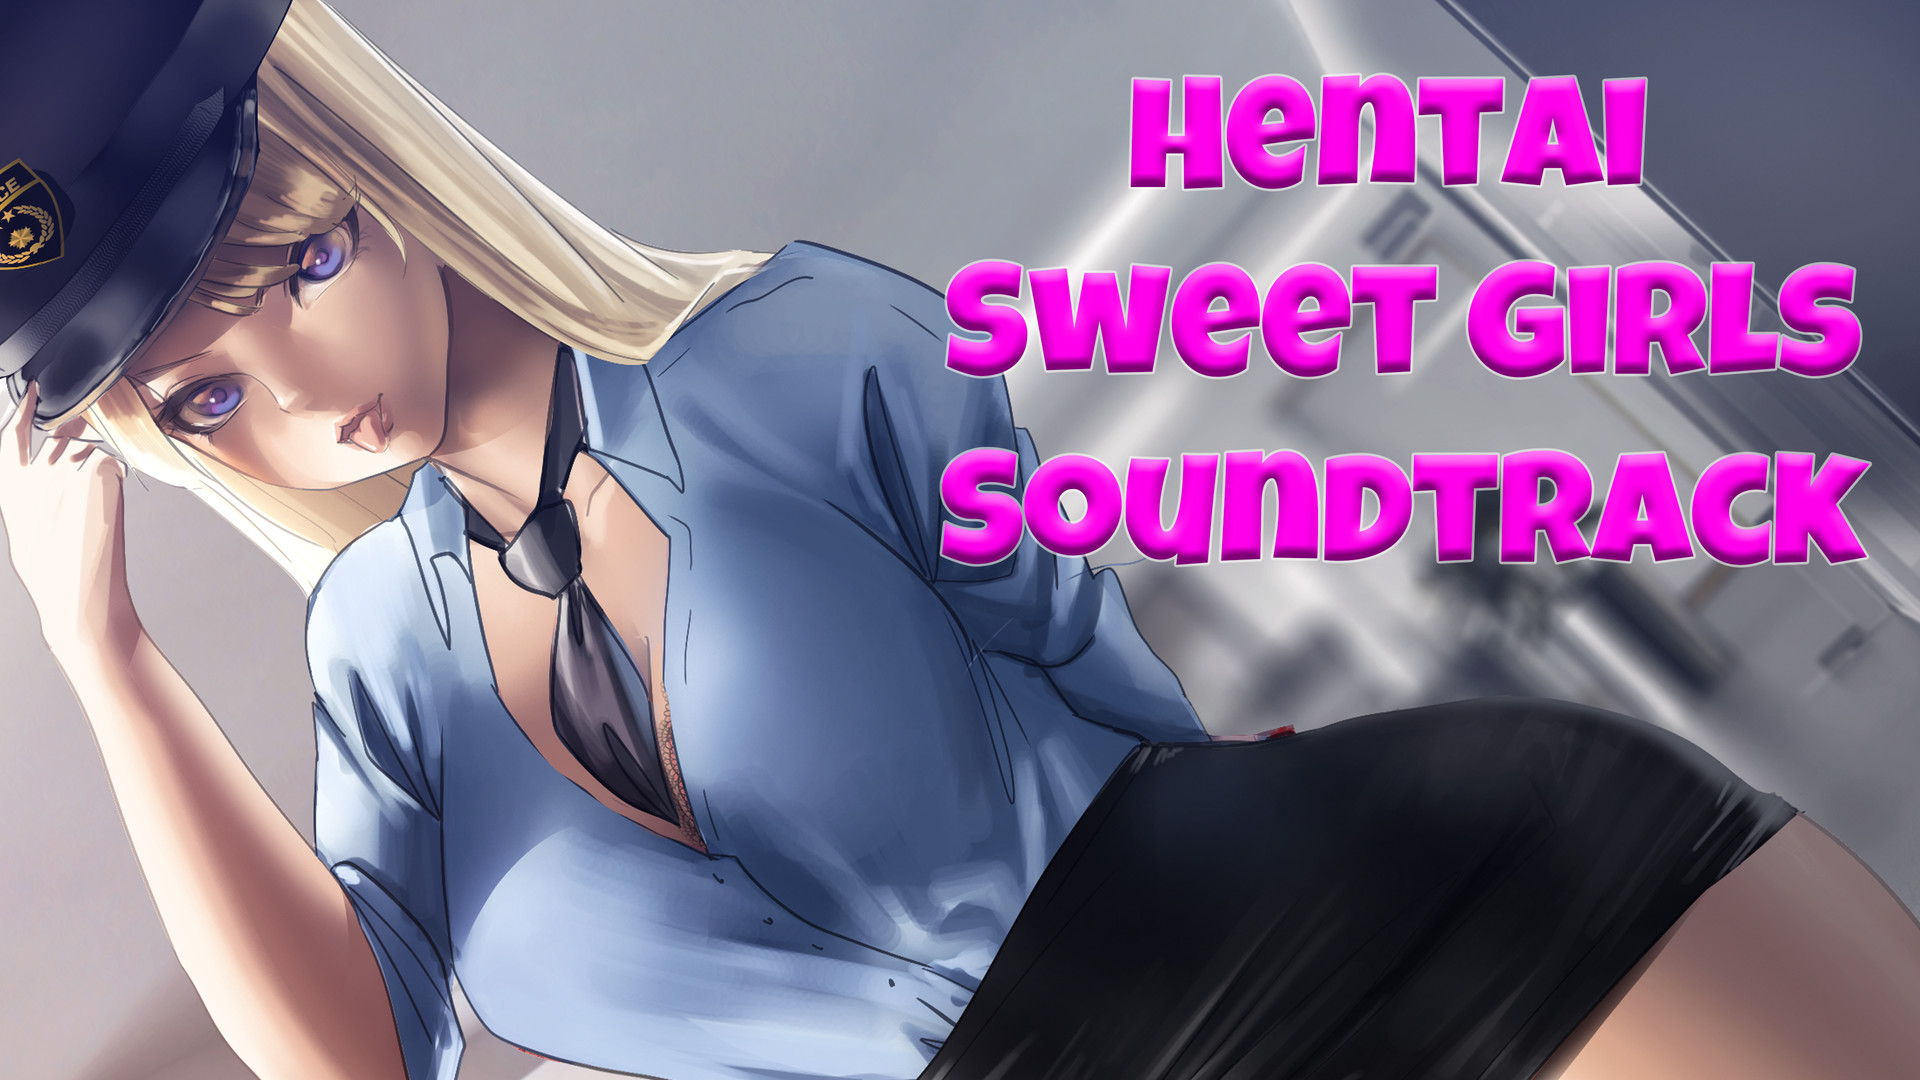 Hentai Sweet Girls - Soundtrack Featured Screenshot #1